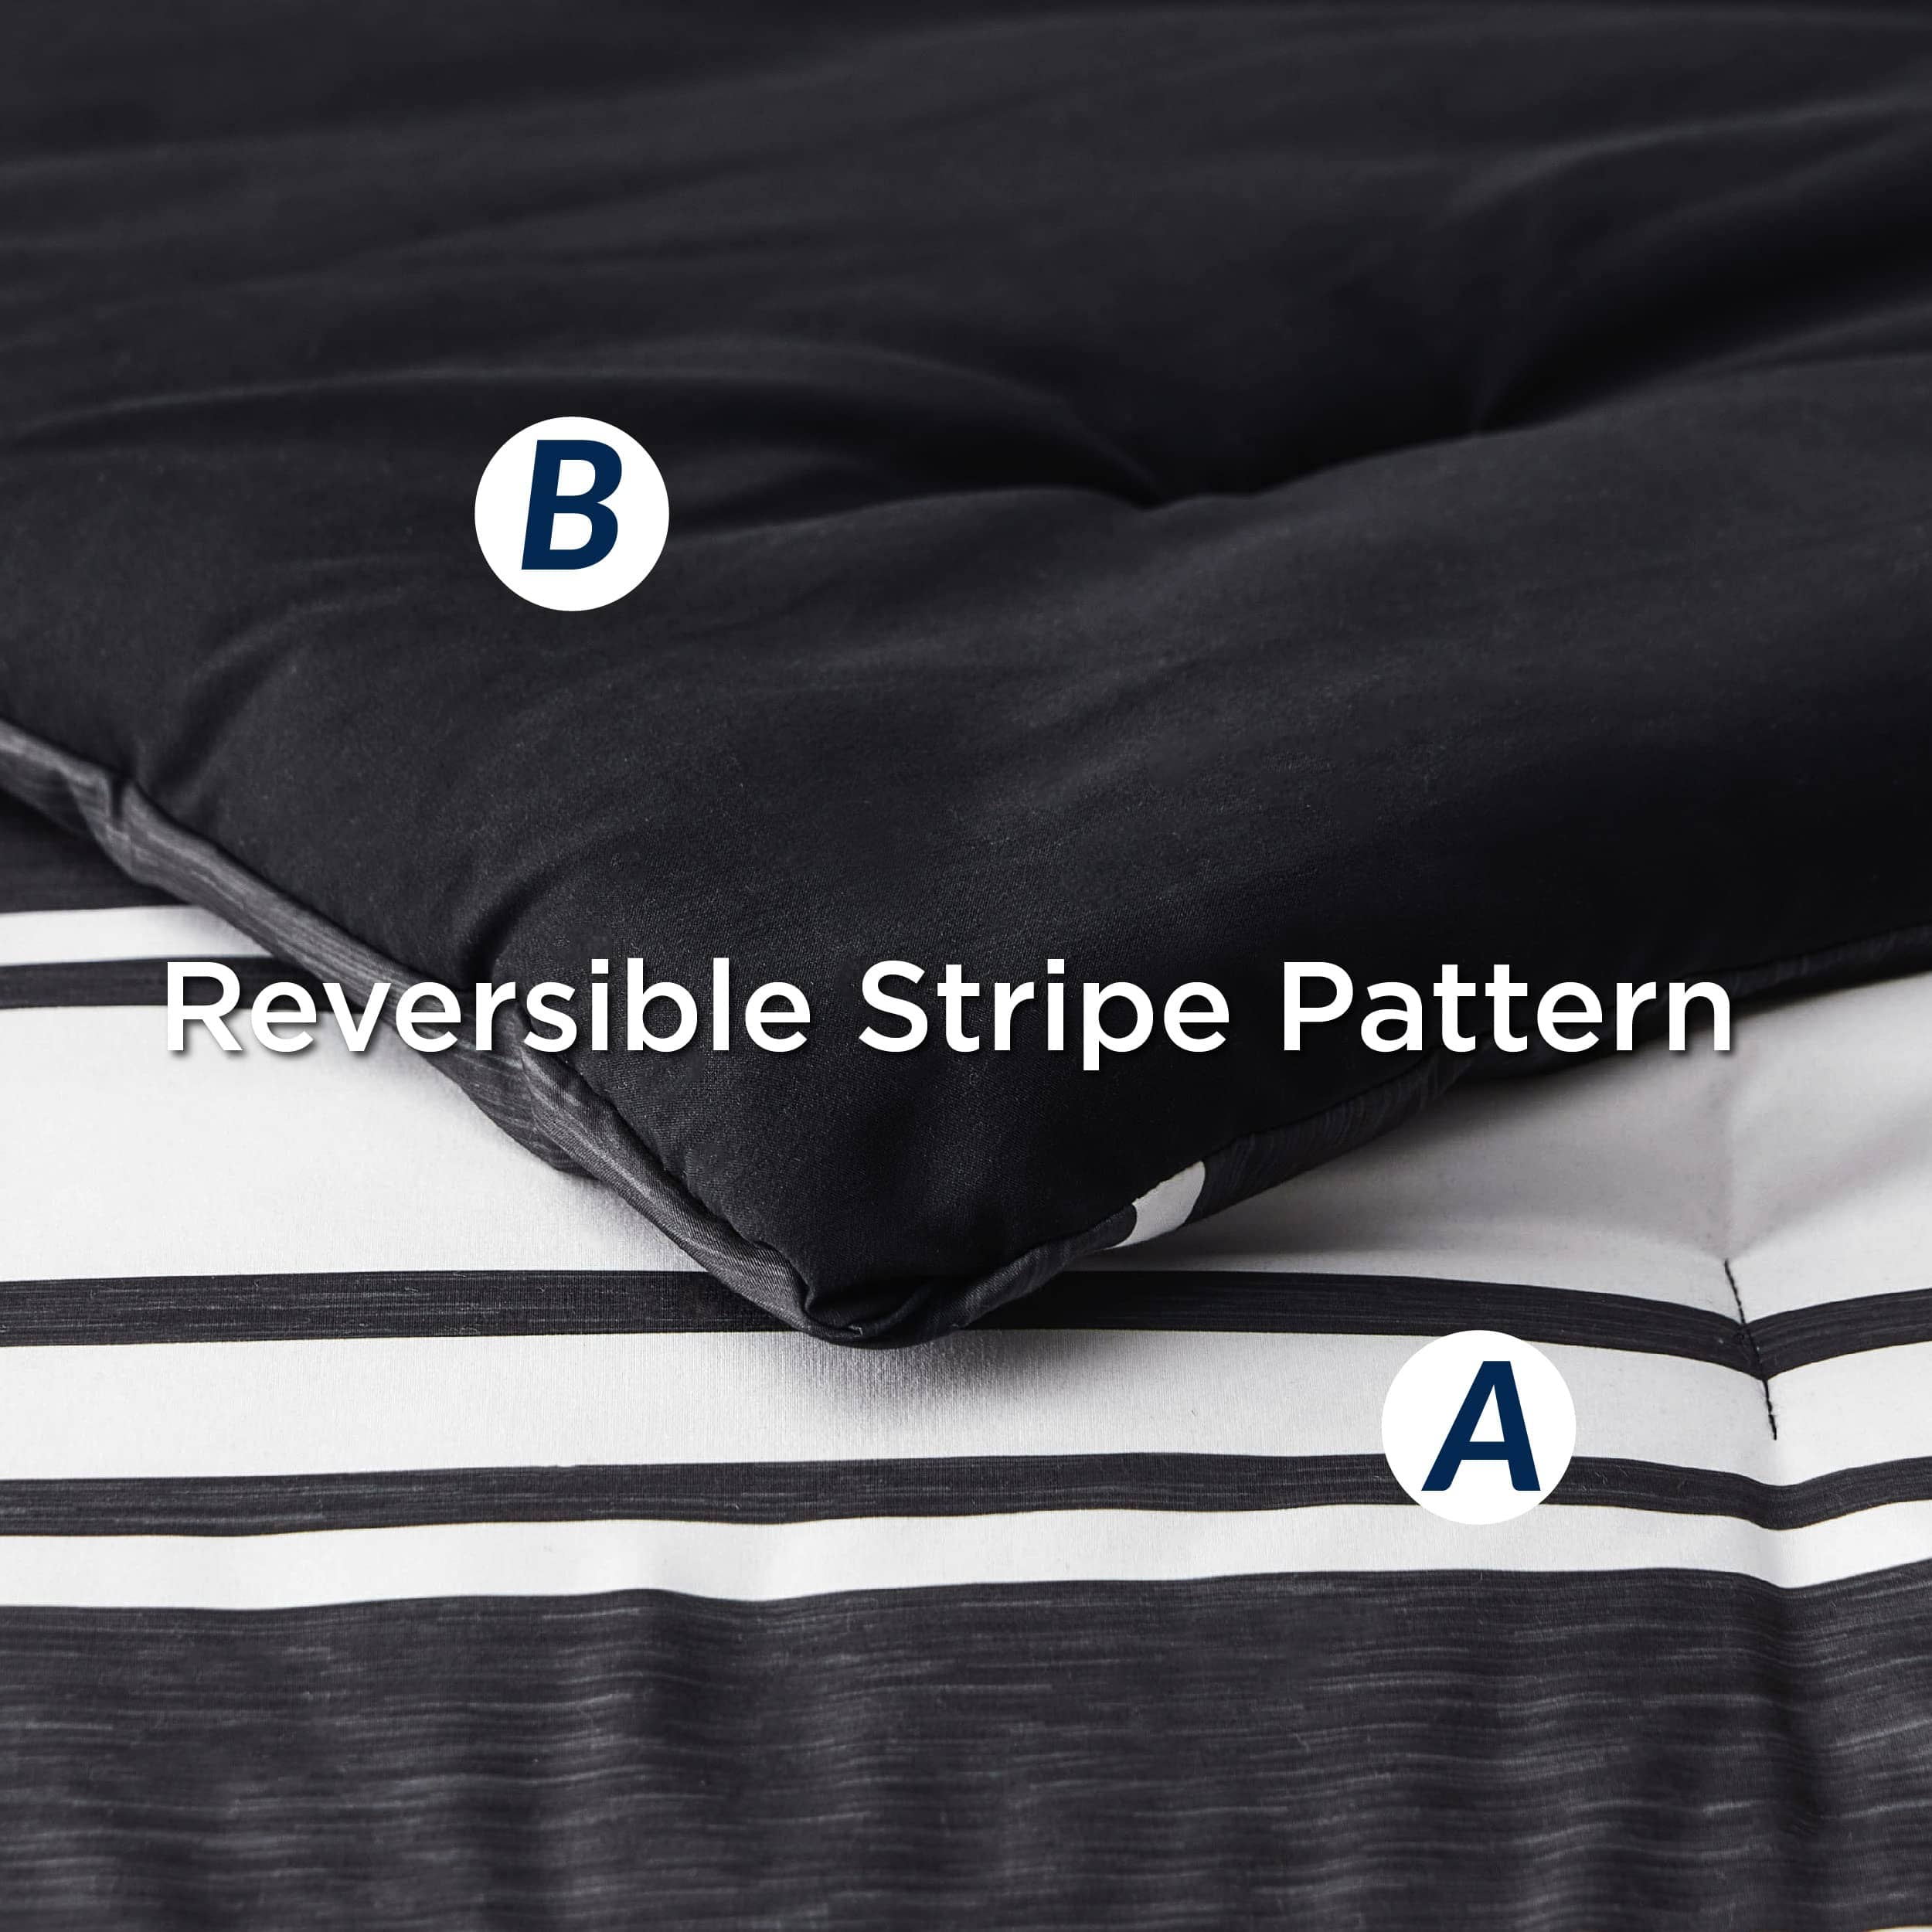 Stripe-Patterned Bed-in-a-Bag-2